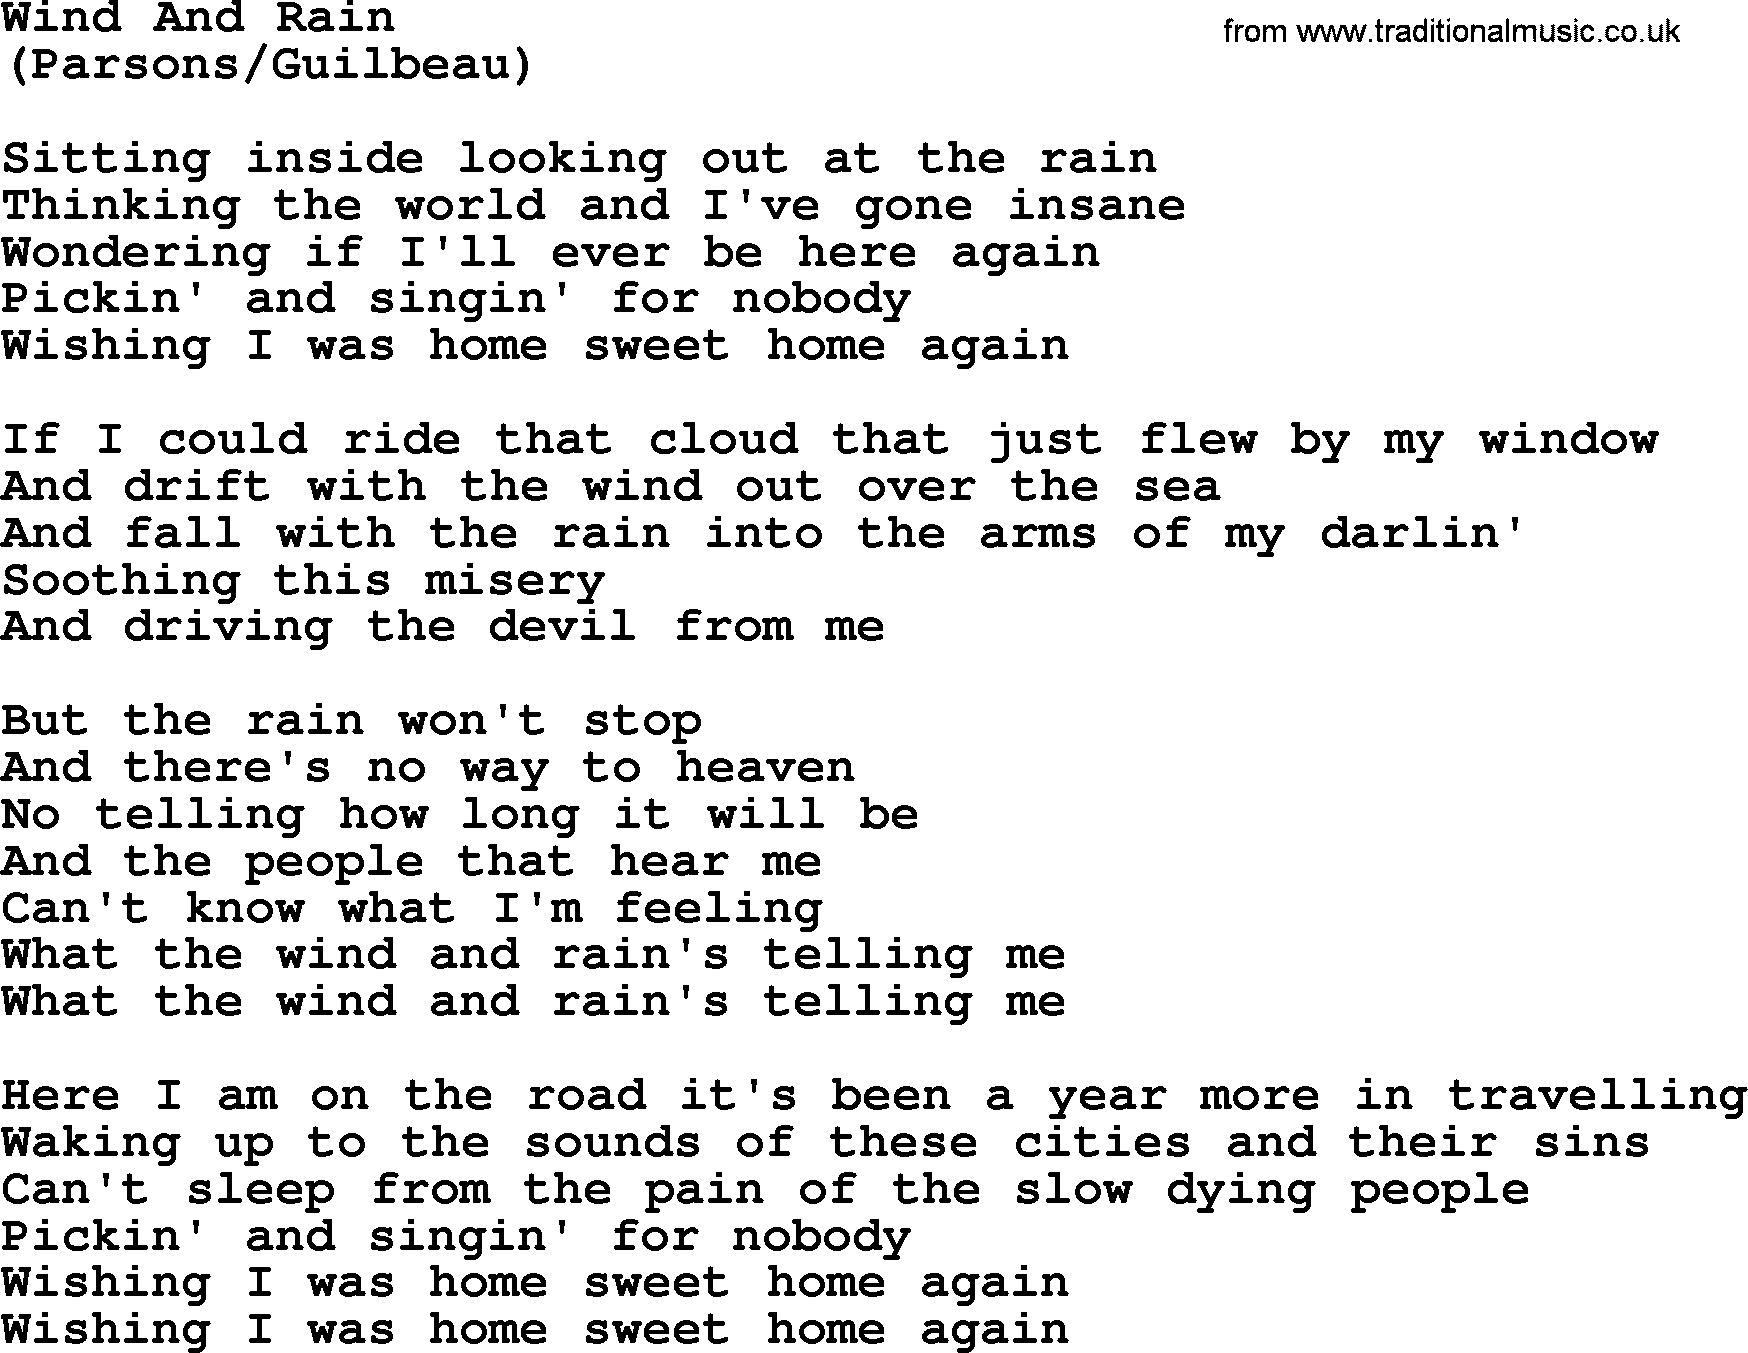 The Byrds song Wind And Rain, lyrics